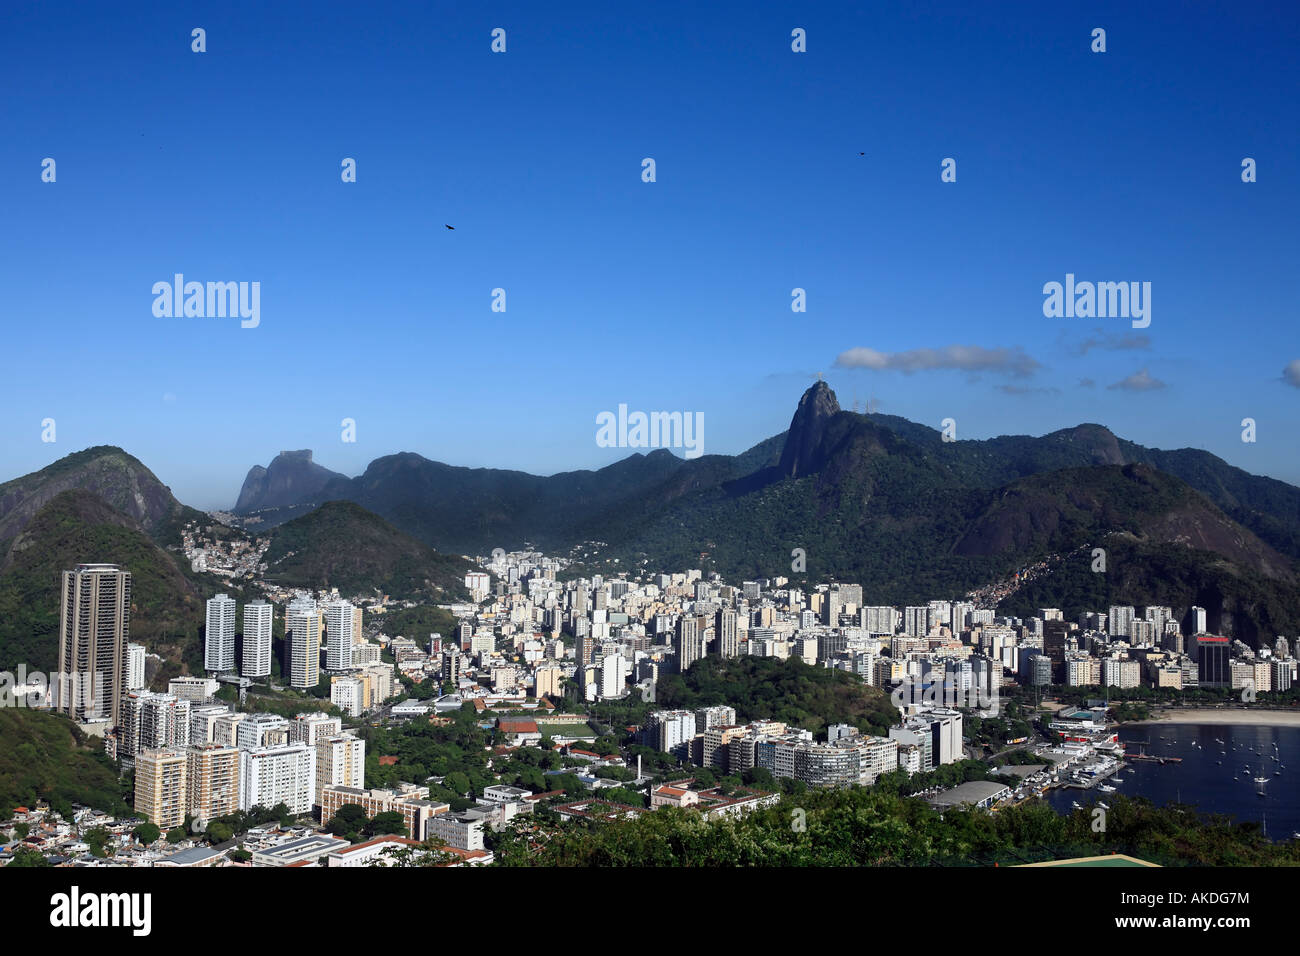 Vista aerea del botafogo dal pan di zucchero di Rio de Janeiro in Brasile Foto Stock